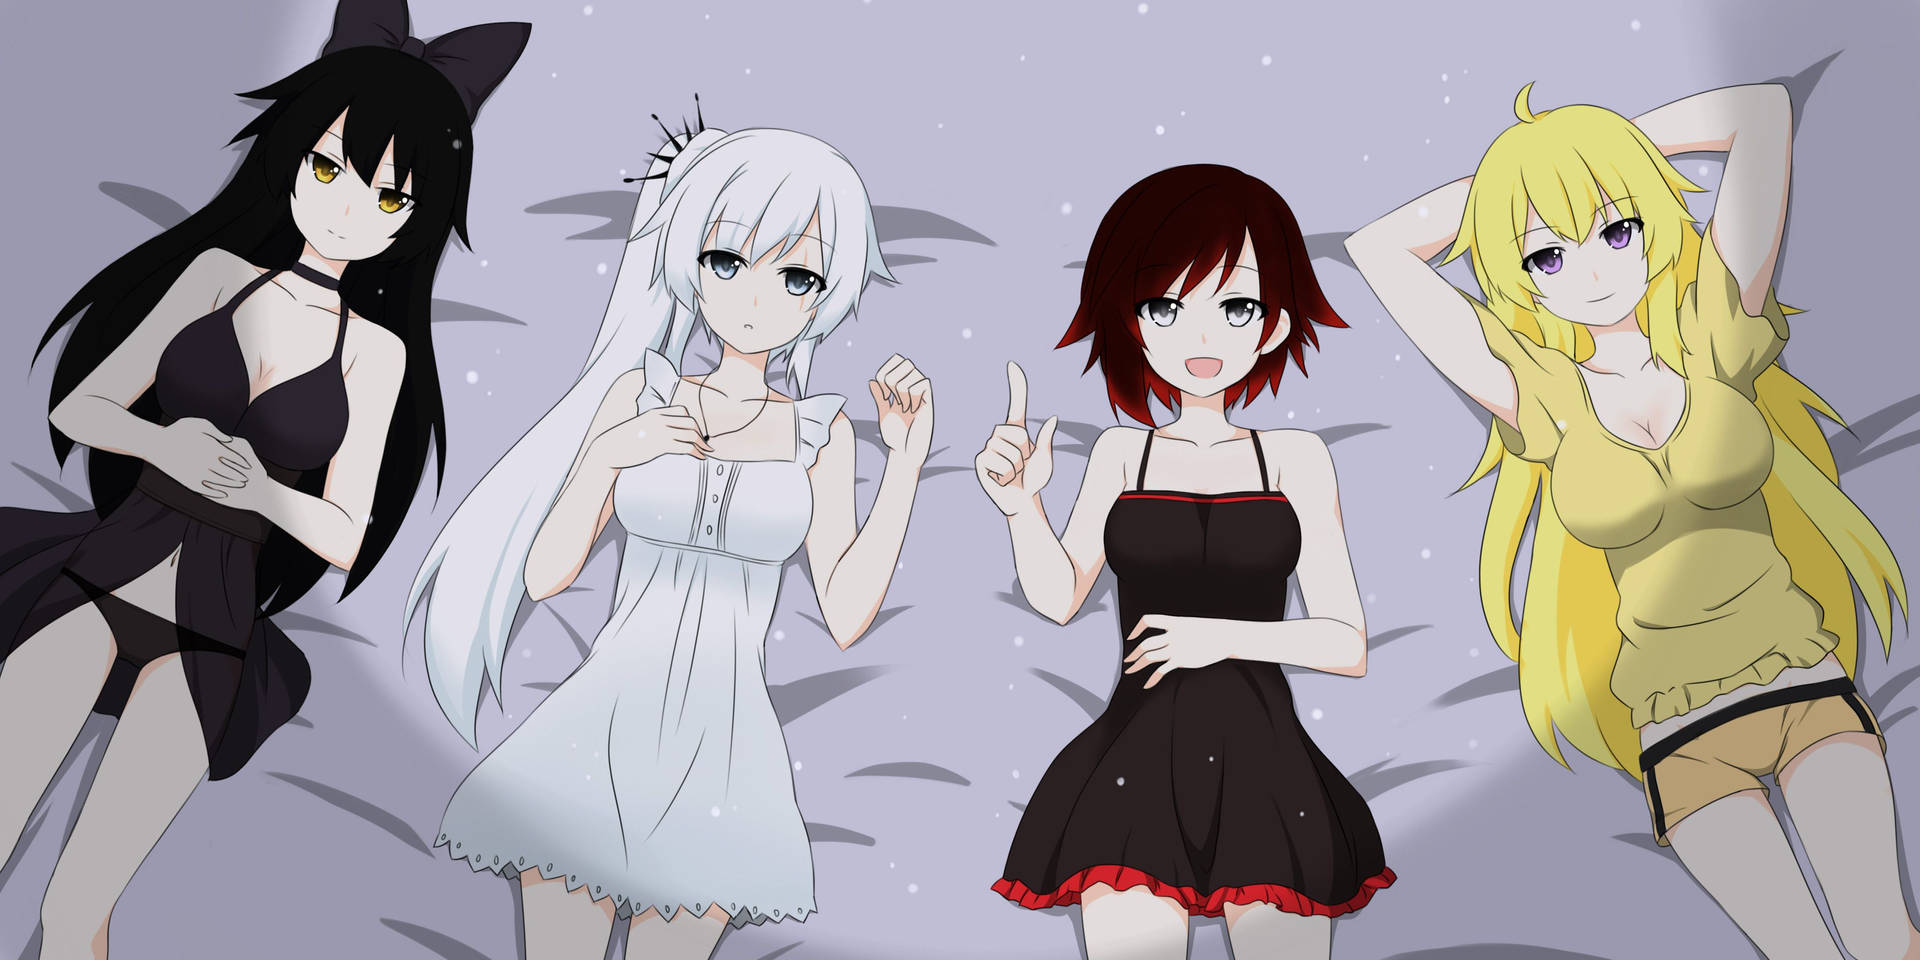 Best Friends Forever in Sleepwear - Ruby, Weiss, Blake, and Yang of RWBY Wallpaper